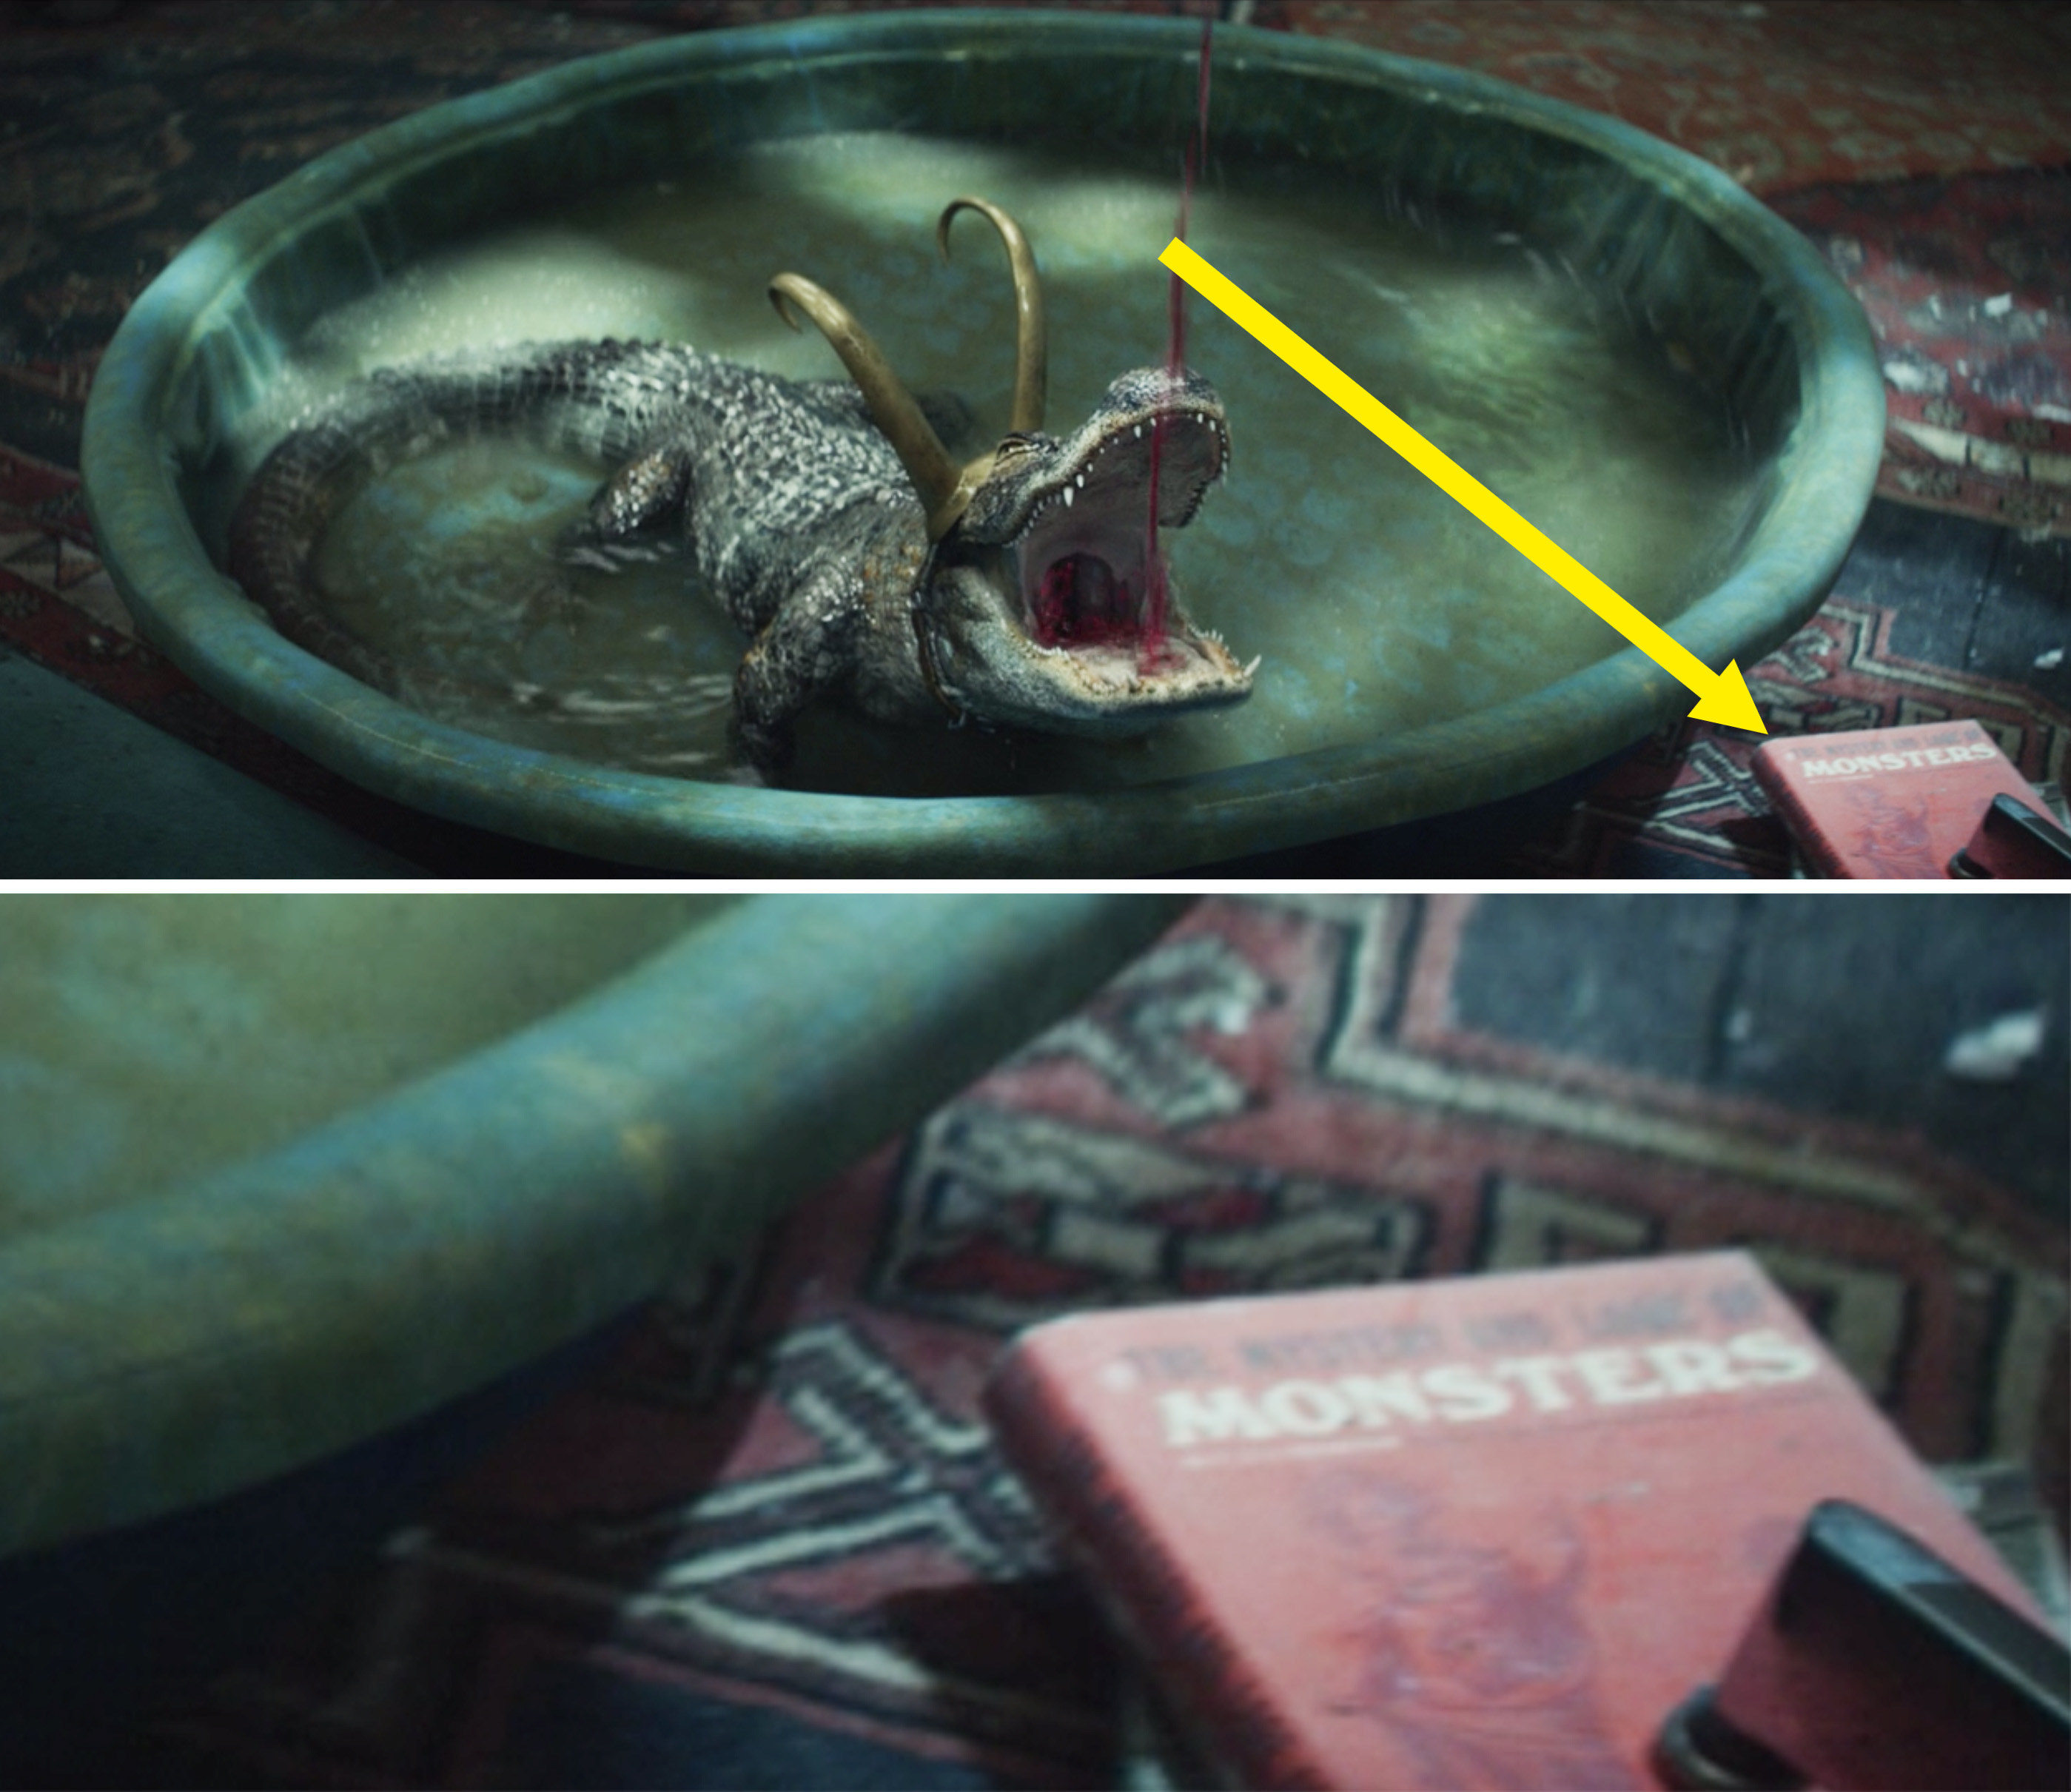 Alligator Loki drinking wine in a kiddie pool next to a book